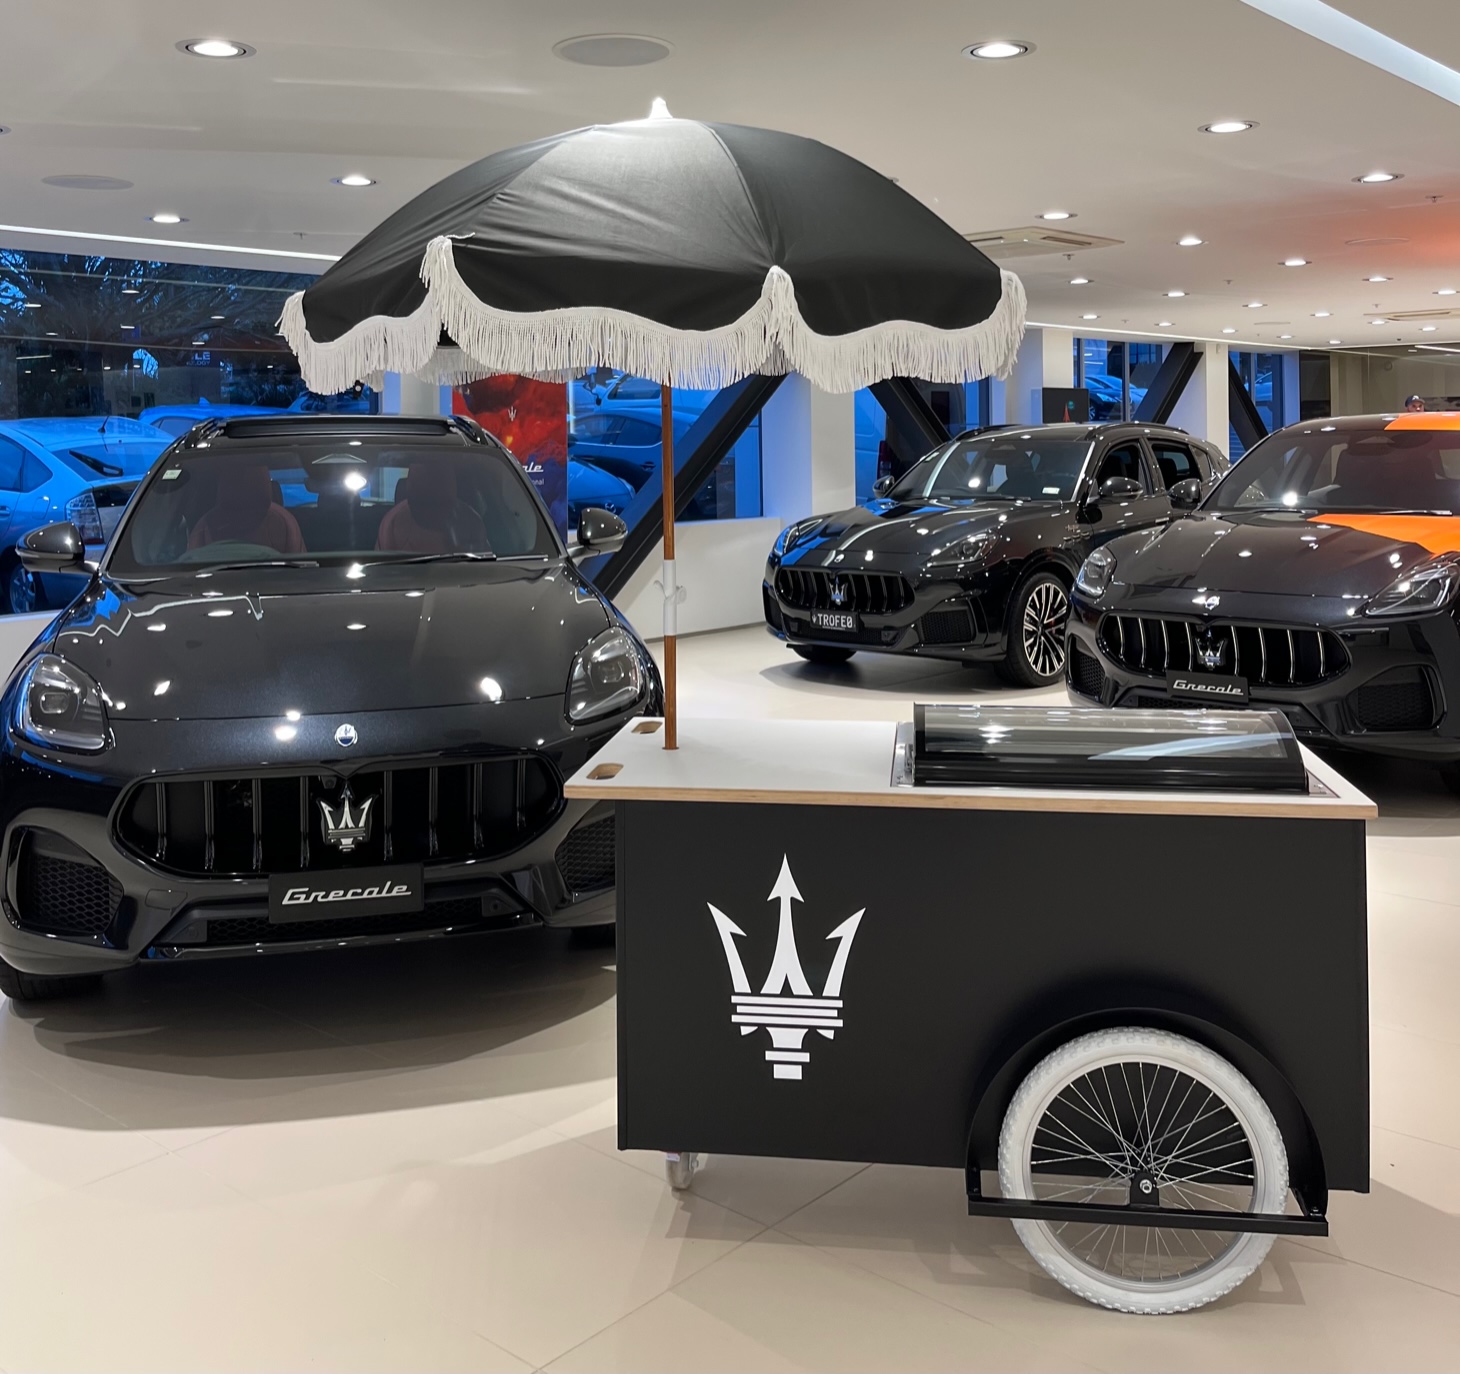 The Cartery - Maserati gelato cart